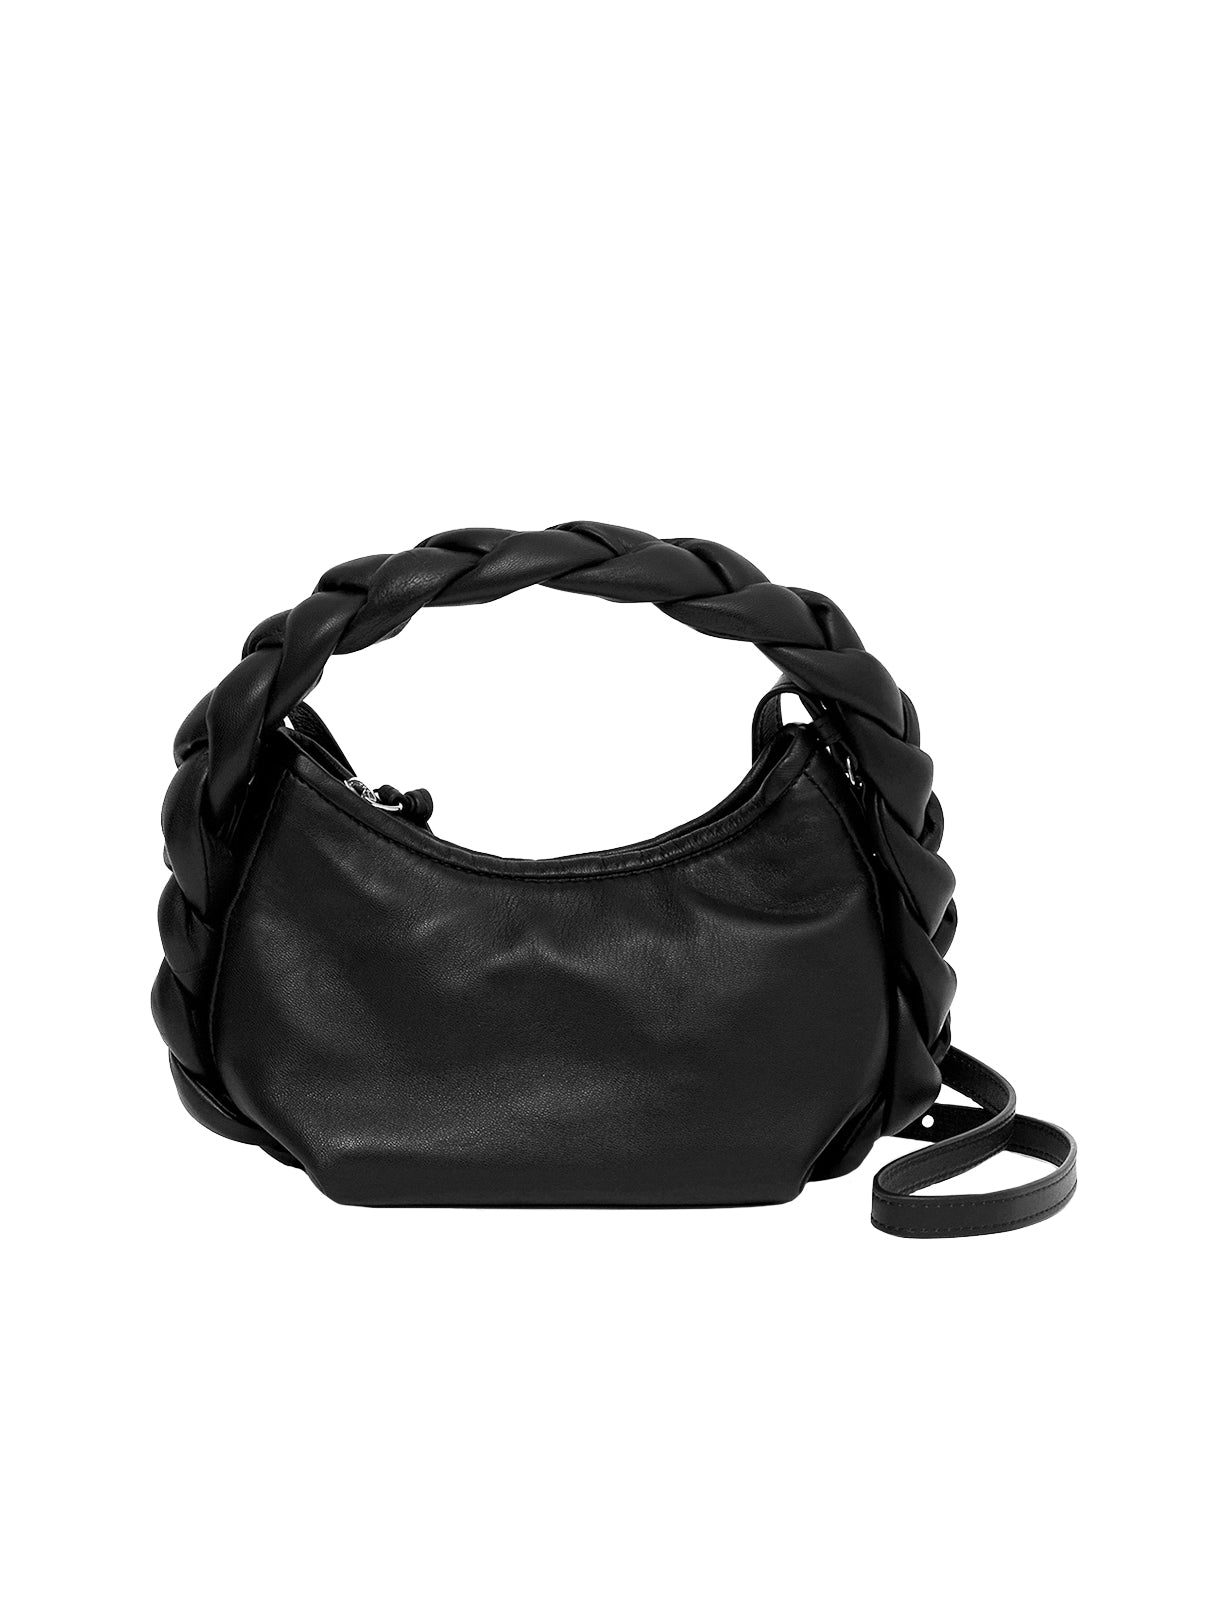 Genuine Leather Purse 8x6x3 Handbag Braided Handle Brown Lots of Pockets |  eBay